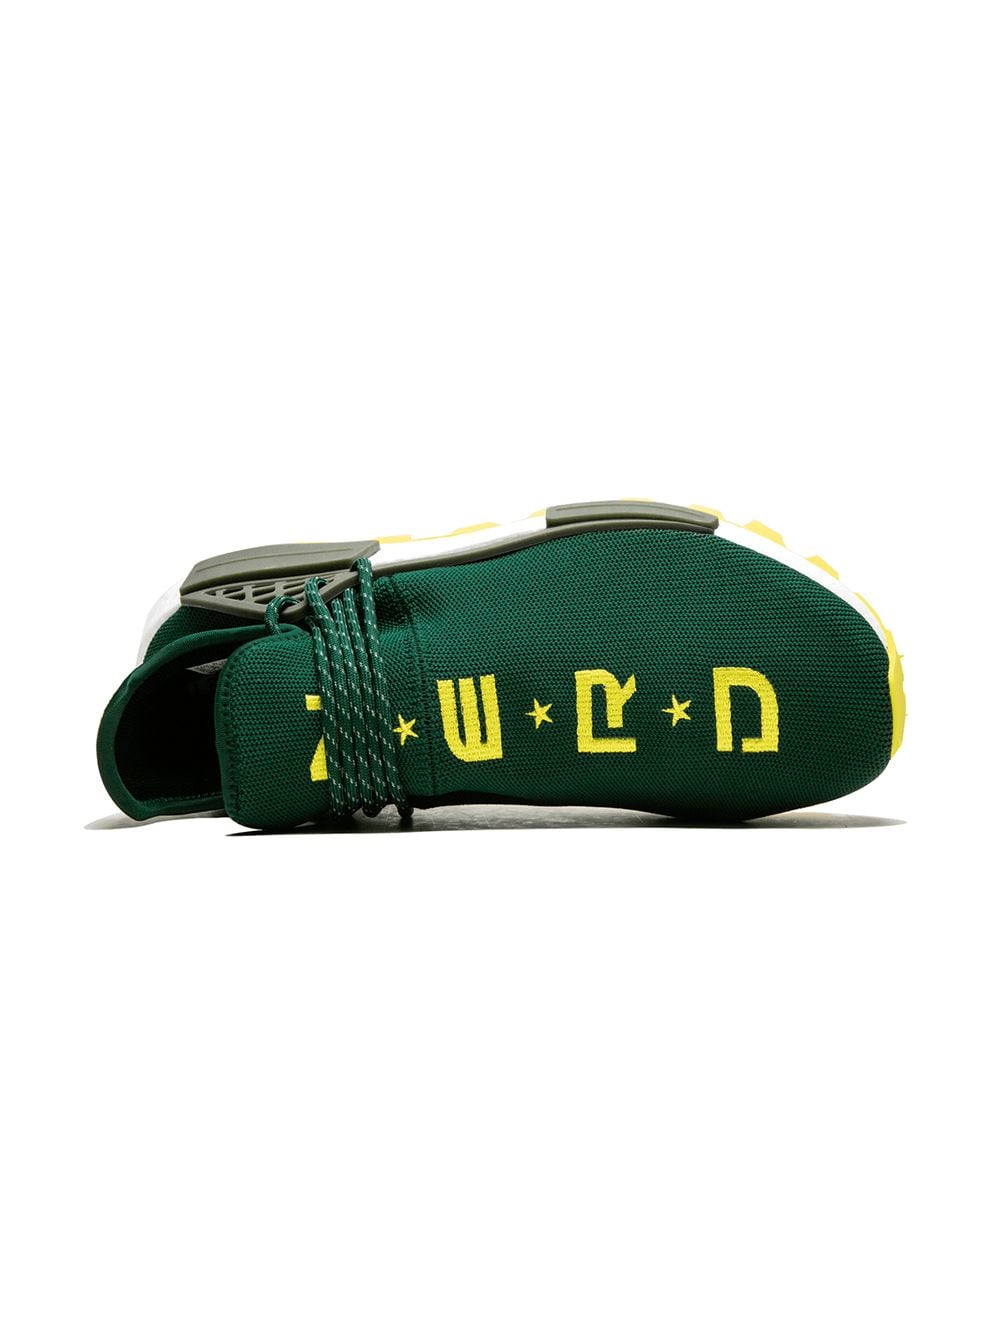 Shop Adidas Originals X Pharrell Williams Hu Nmd "n.e.r.d" Sneakers In Green/yellow/white